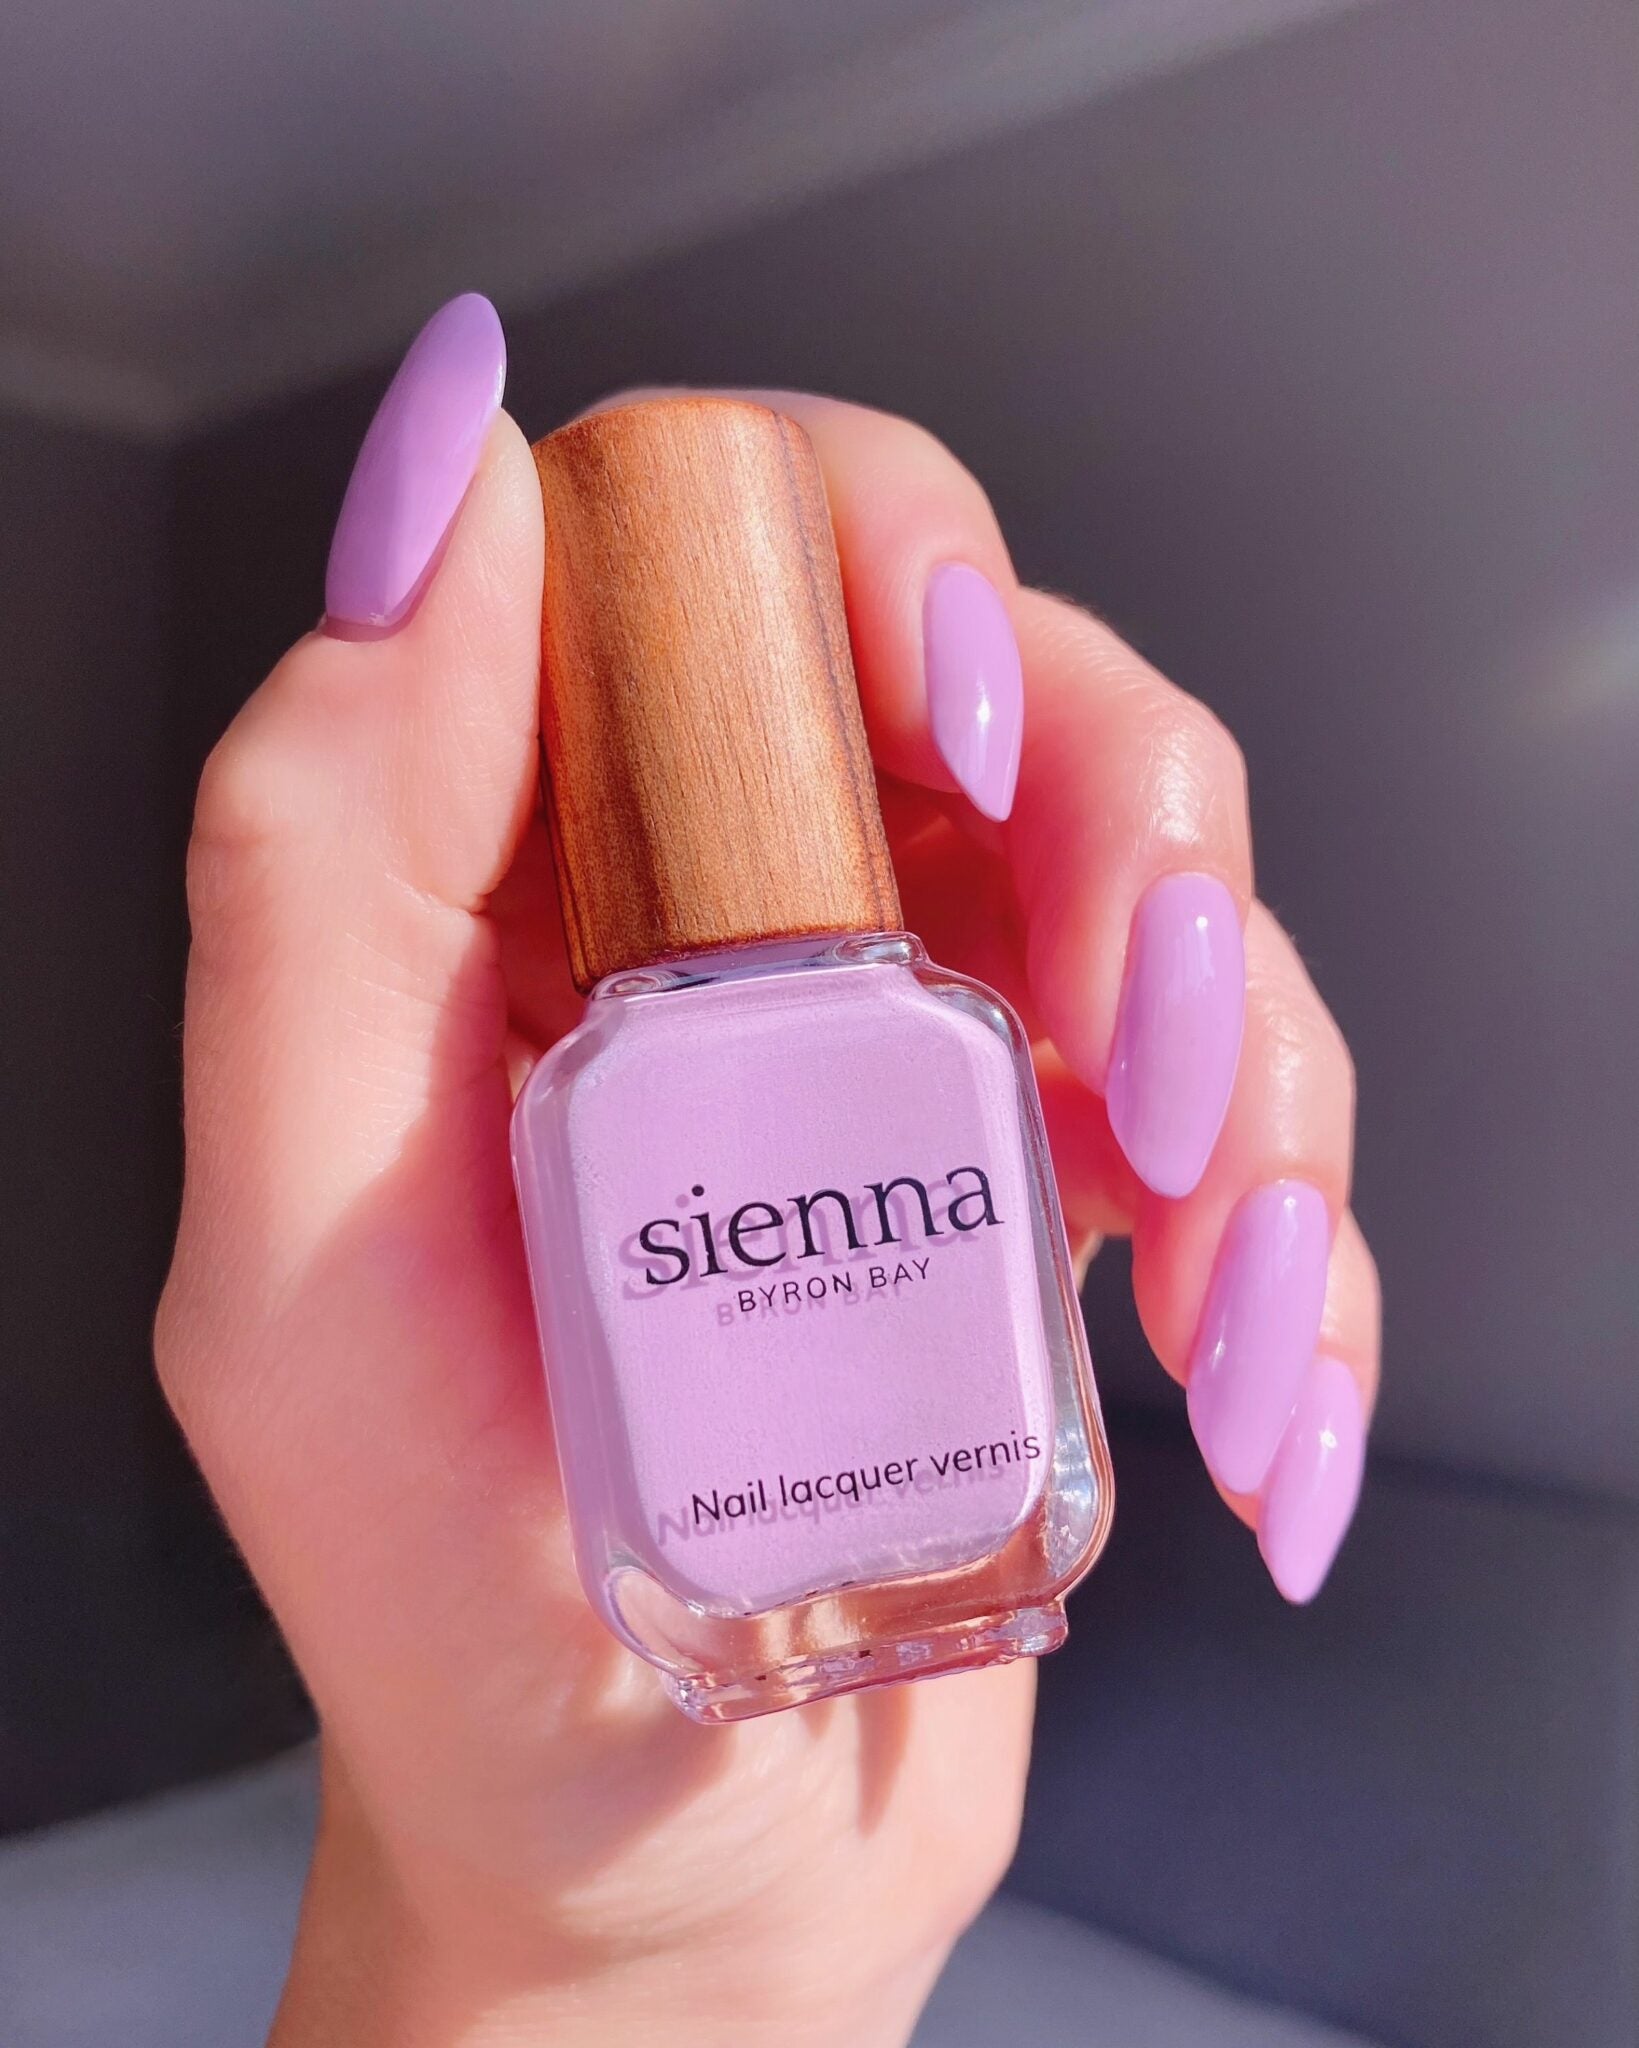 lilac nail polish swatch on fair skin tone by sienna